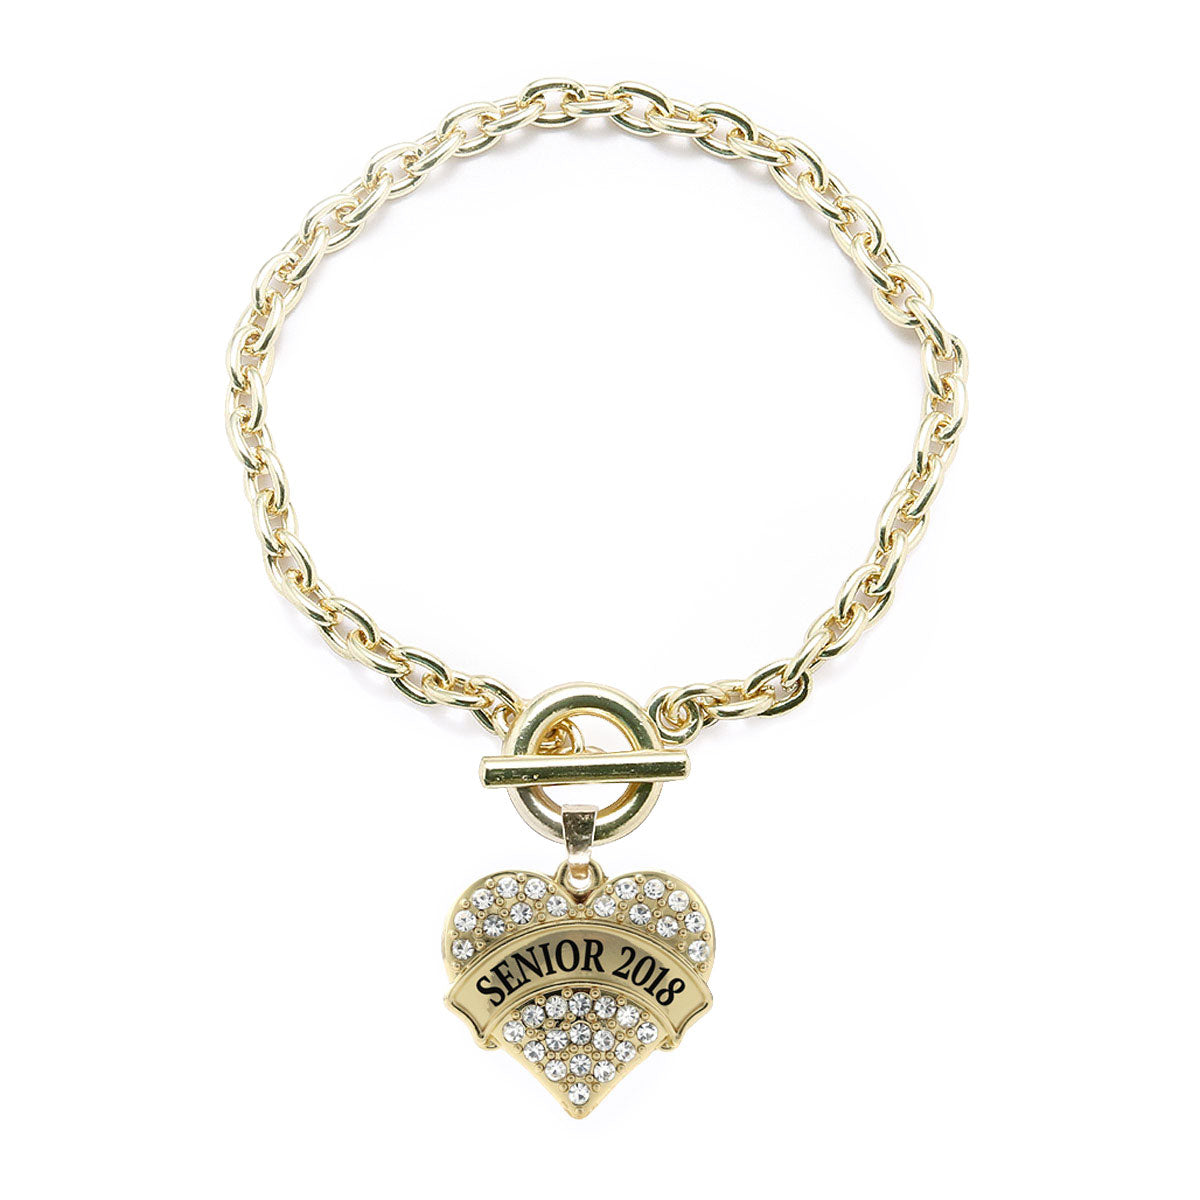 Gold Senior 2018 Pave Heart Charm Toggle Bracelet